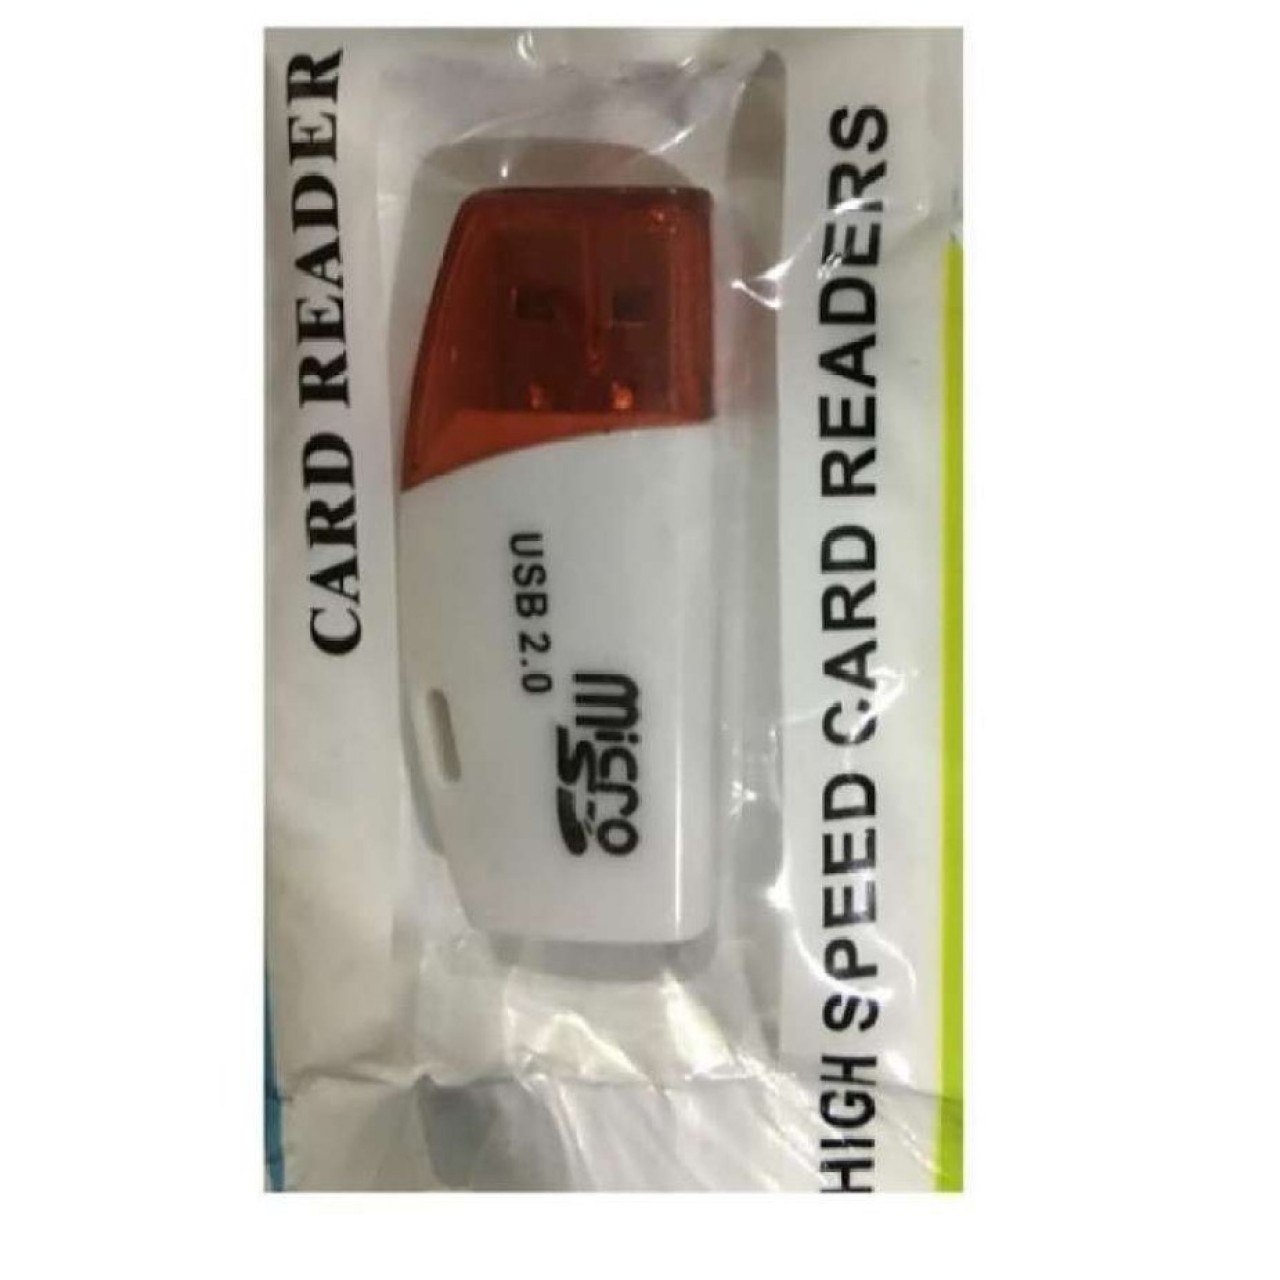 Micro SD USB Mobile Card Reader - White